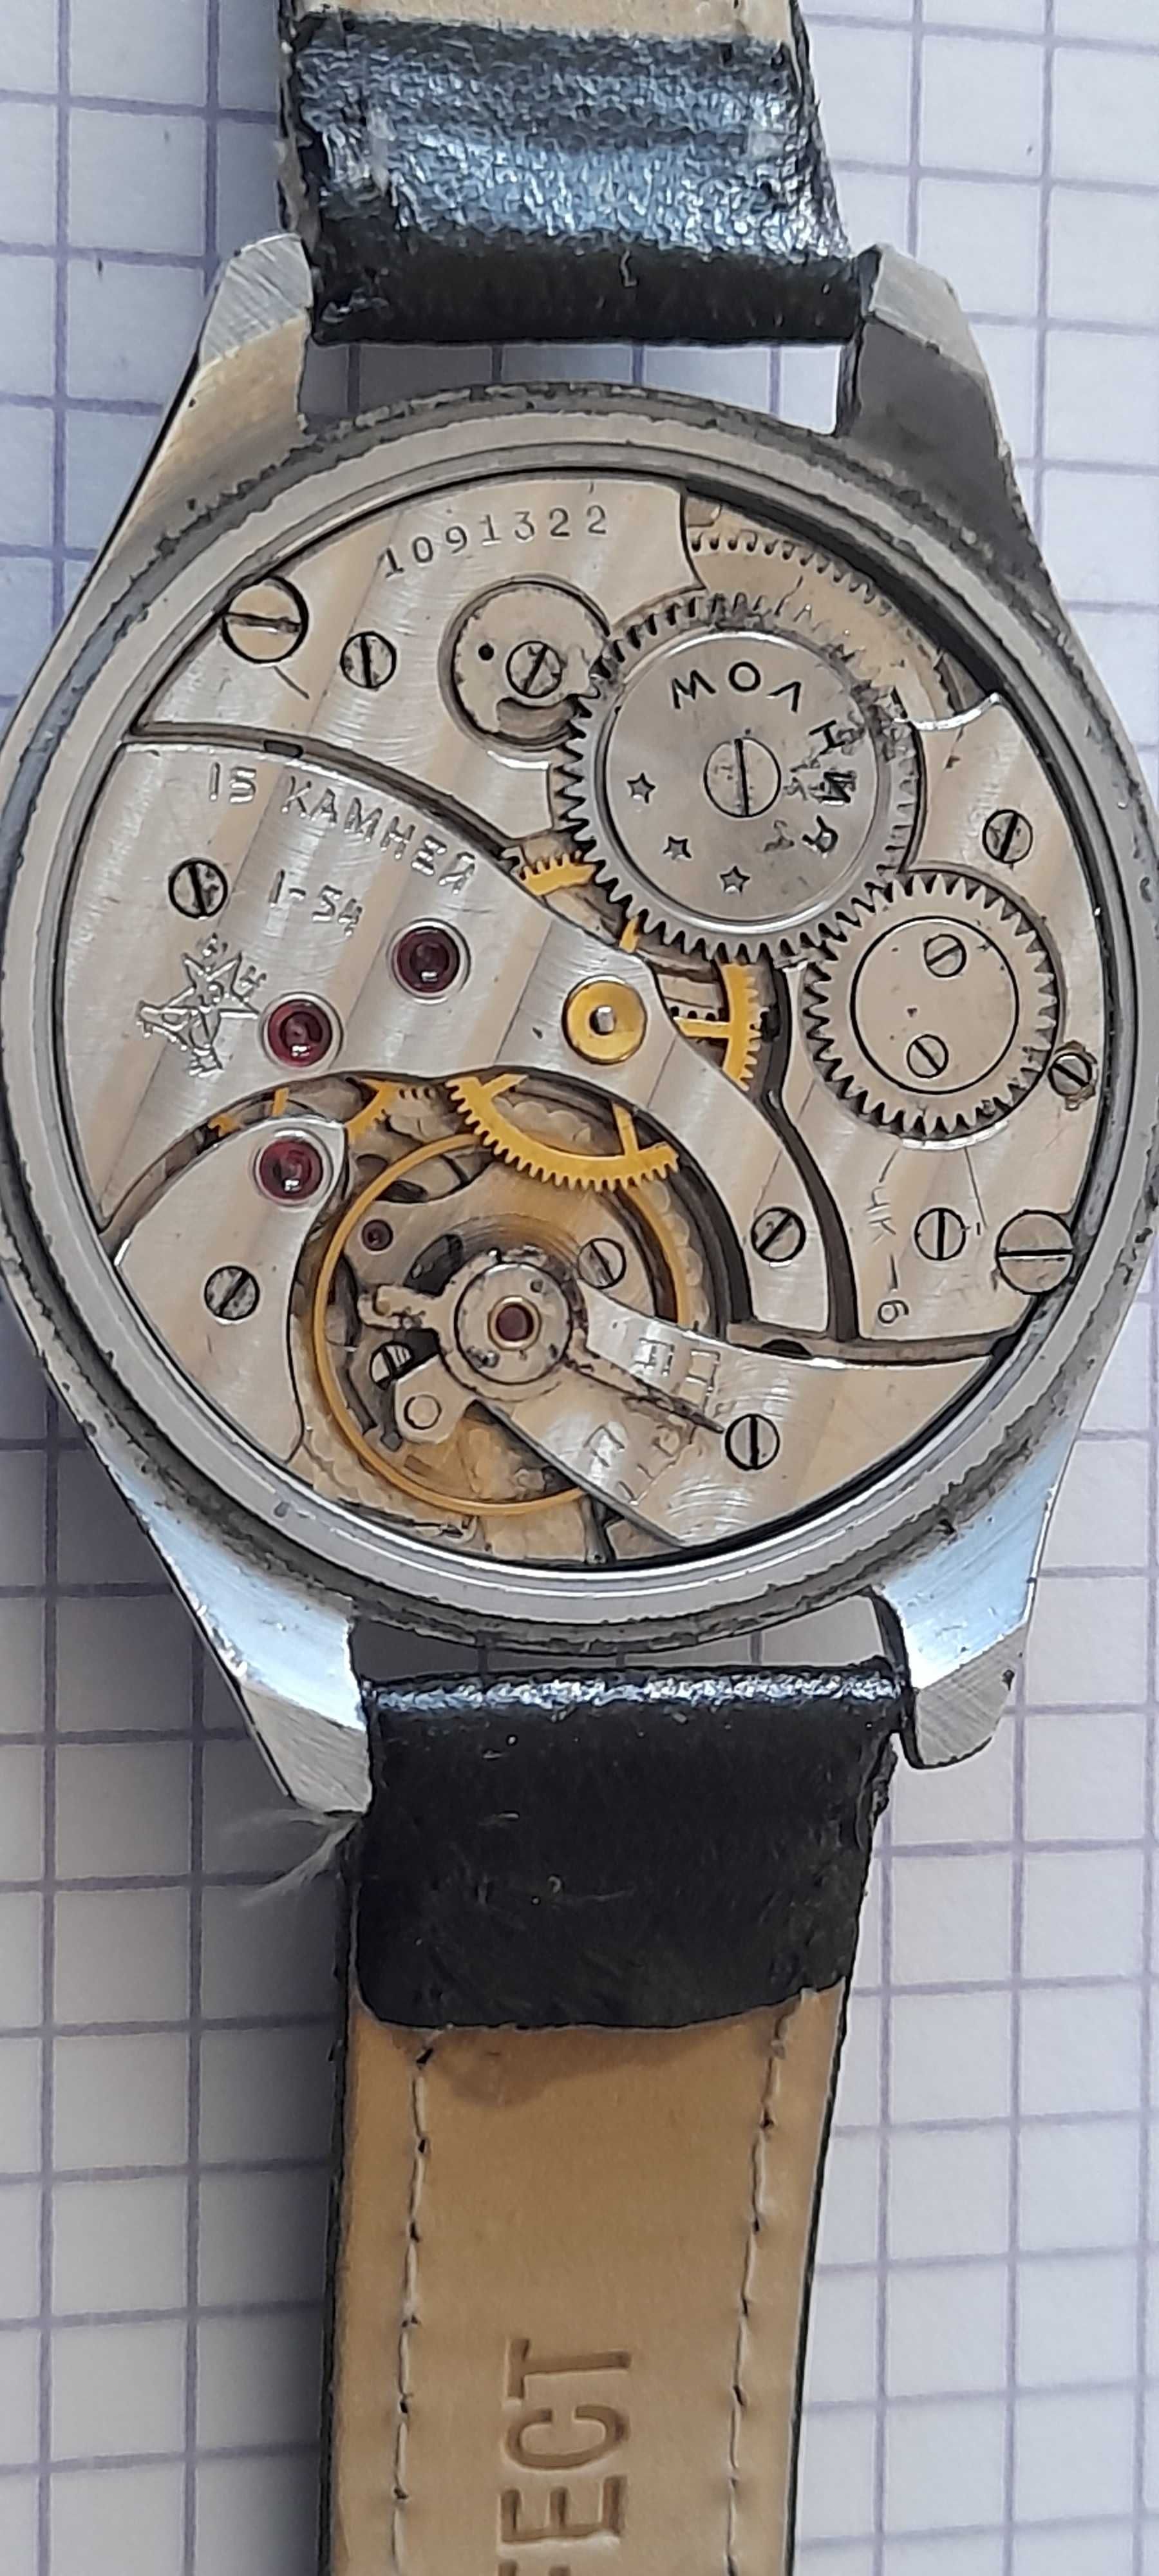 zegarek pasówka Pador na mołni z 1954r cienka szlif w paski, cccp